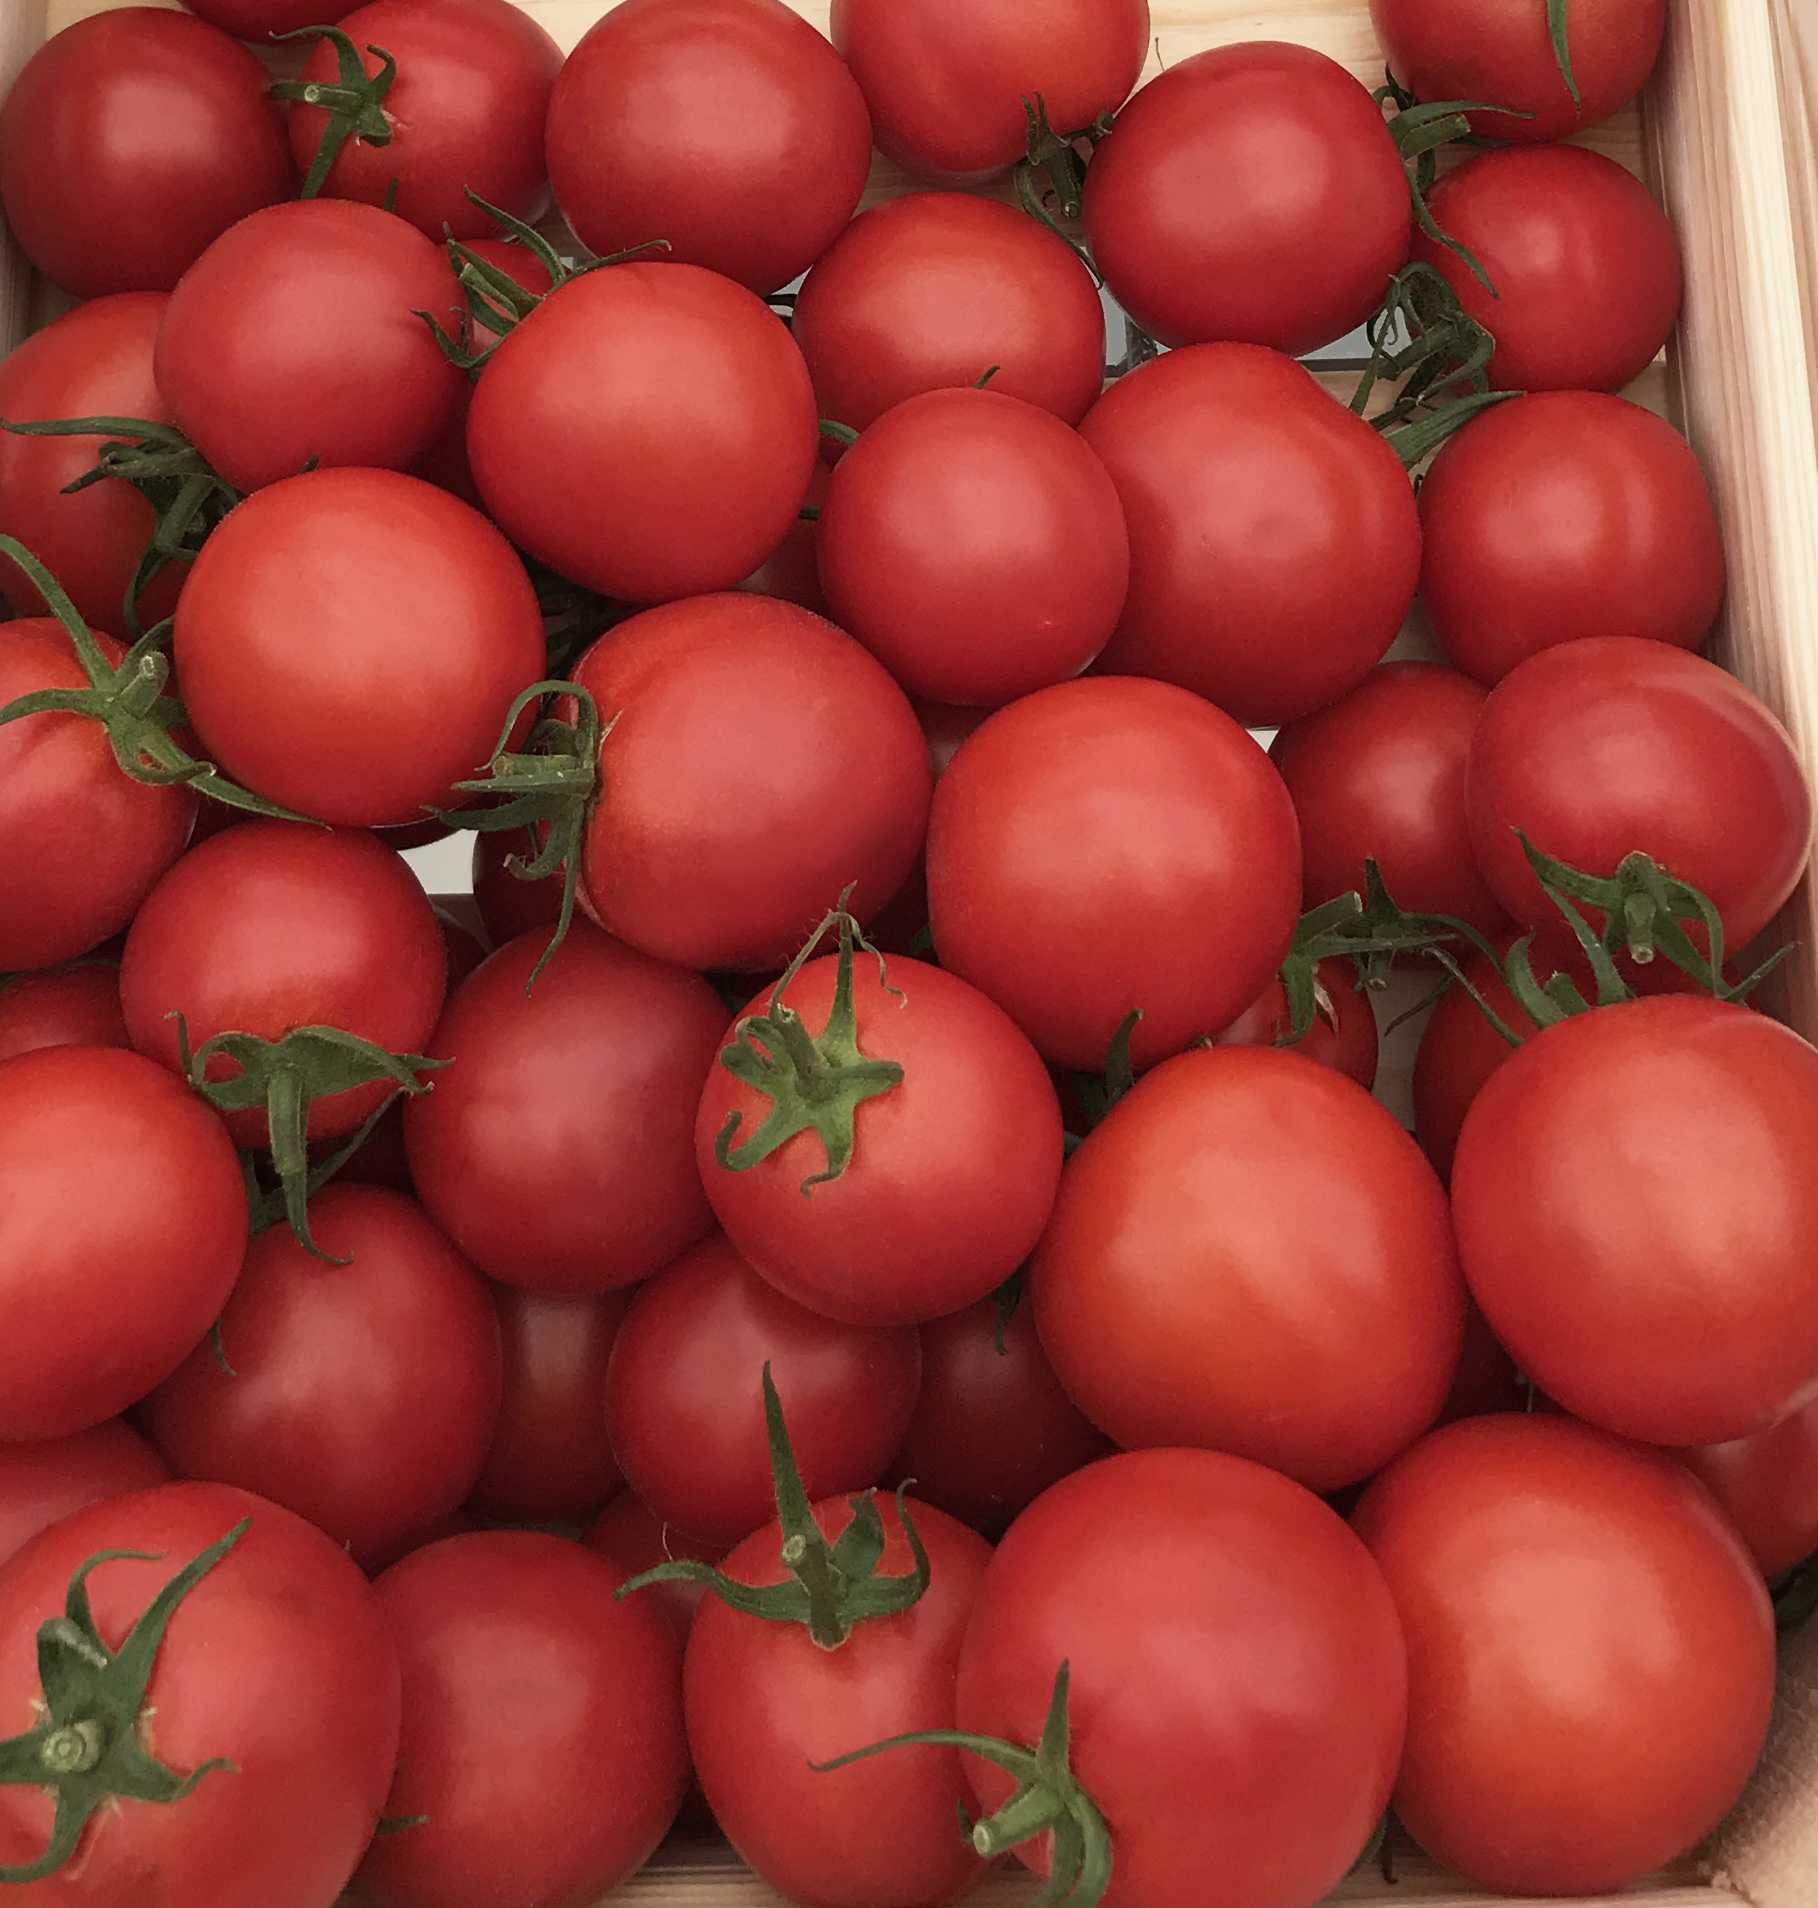 томат толстой f1 фото